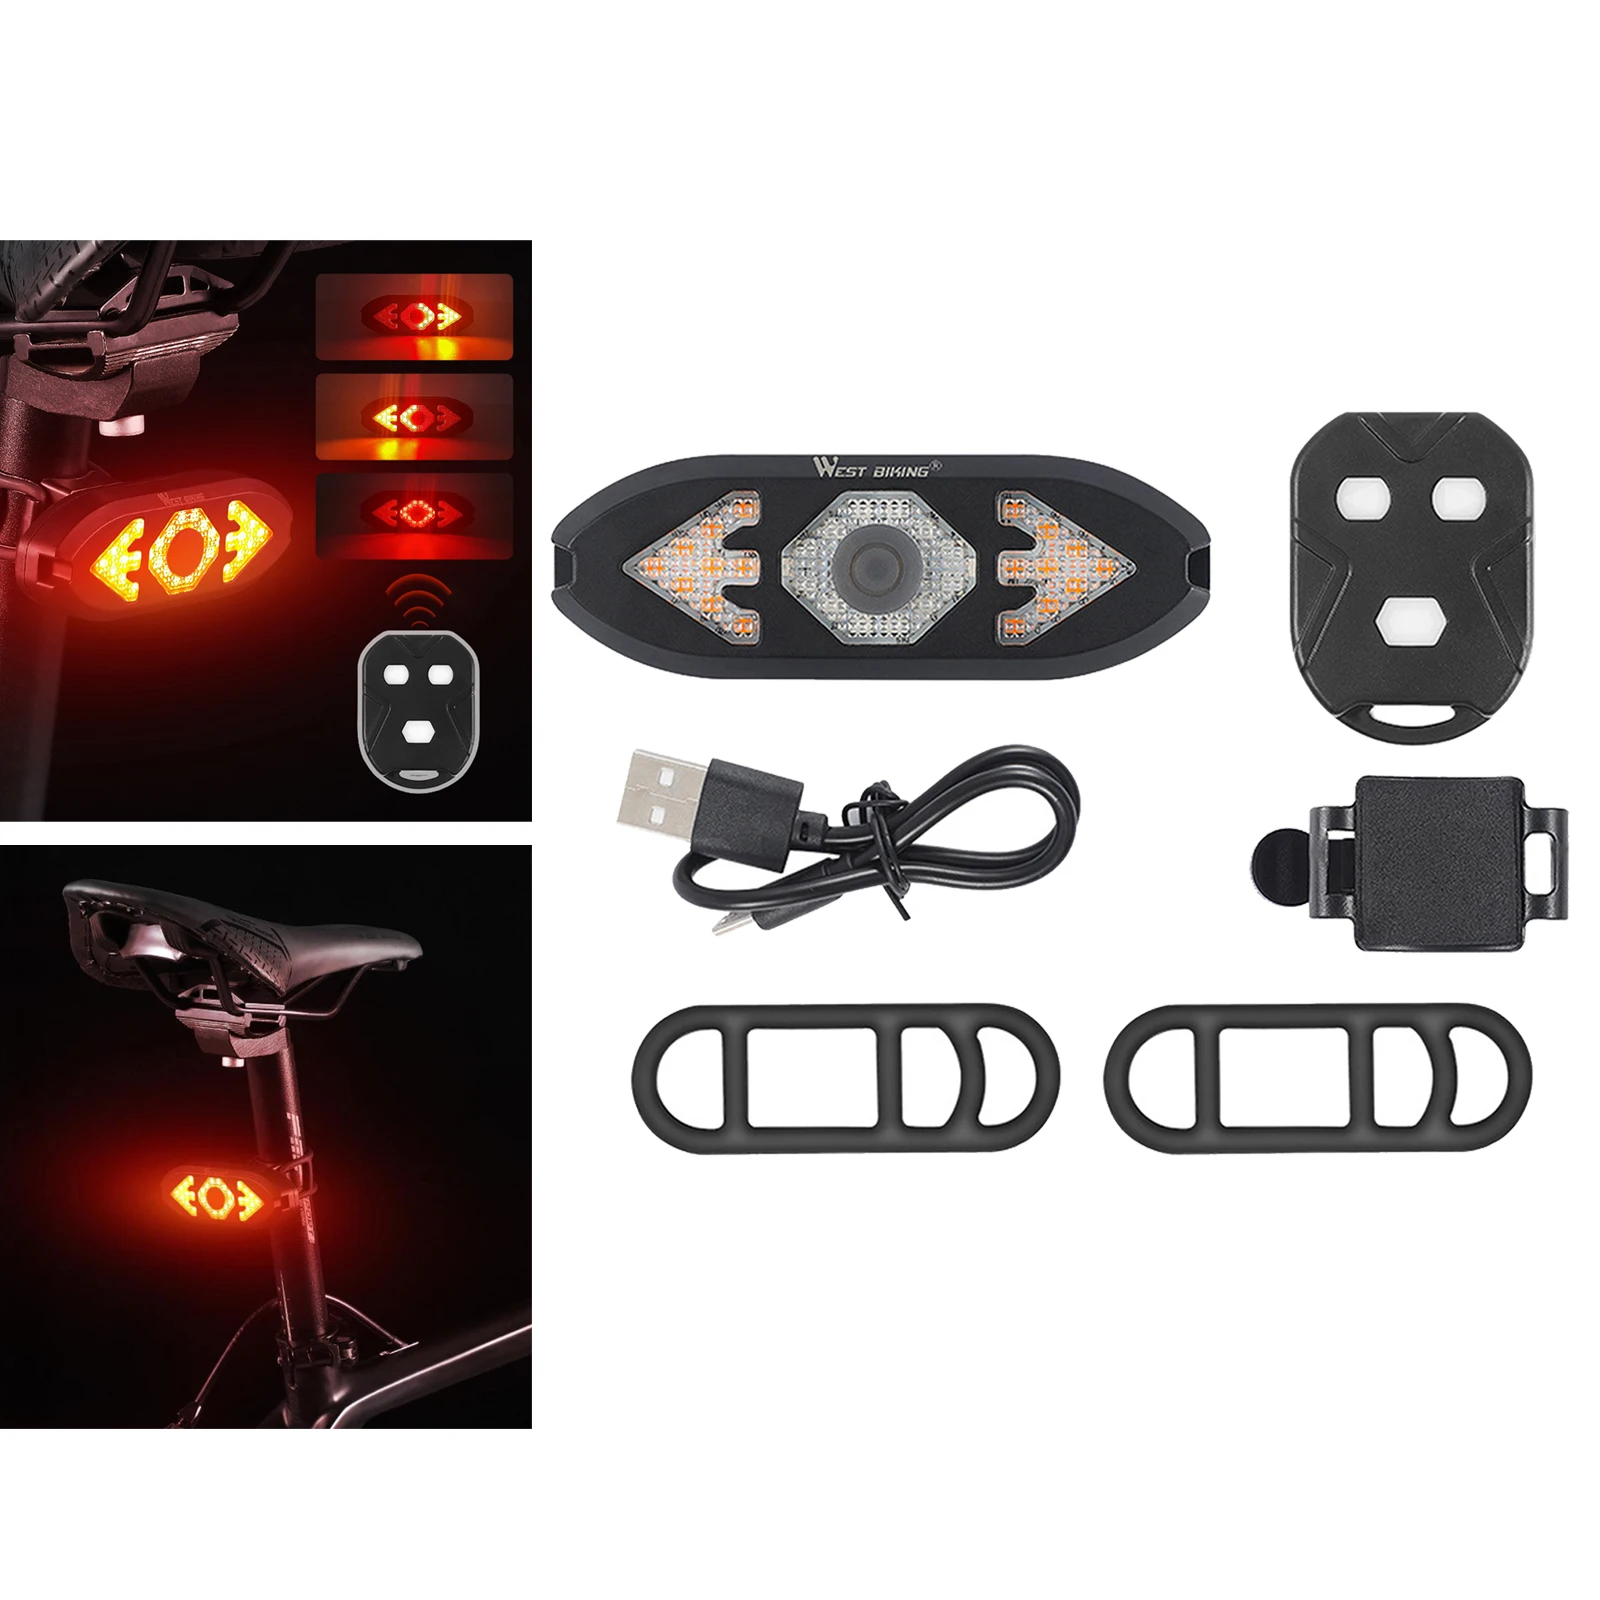 5 Modes Bike Tail Light Turn Signals Wireless Remote Control Mountain Bike Tail Light Waterproof Bicycle Flashing Taillight